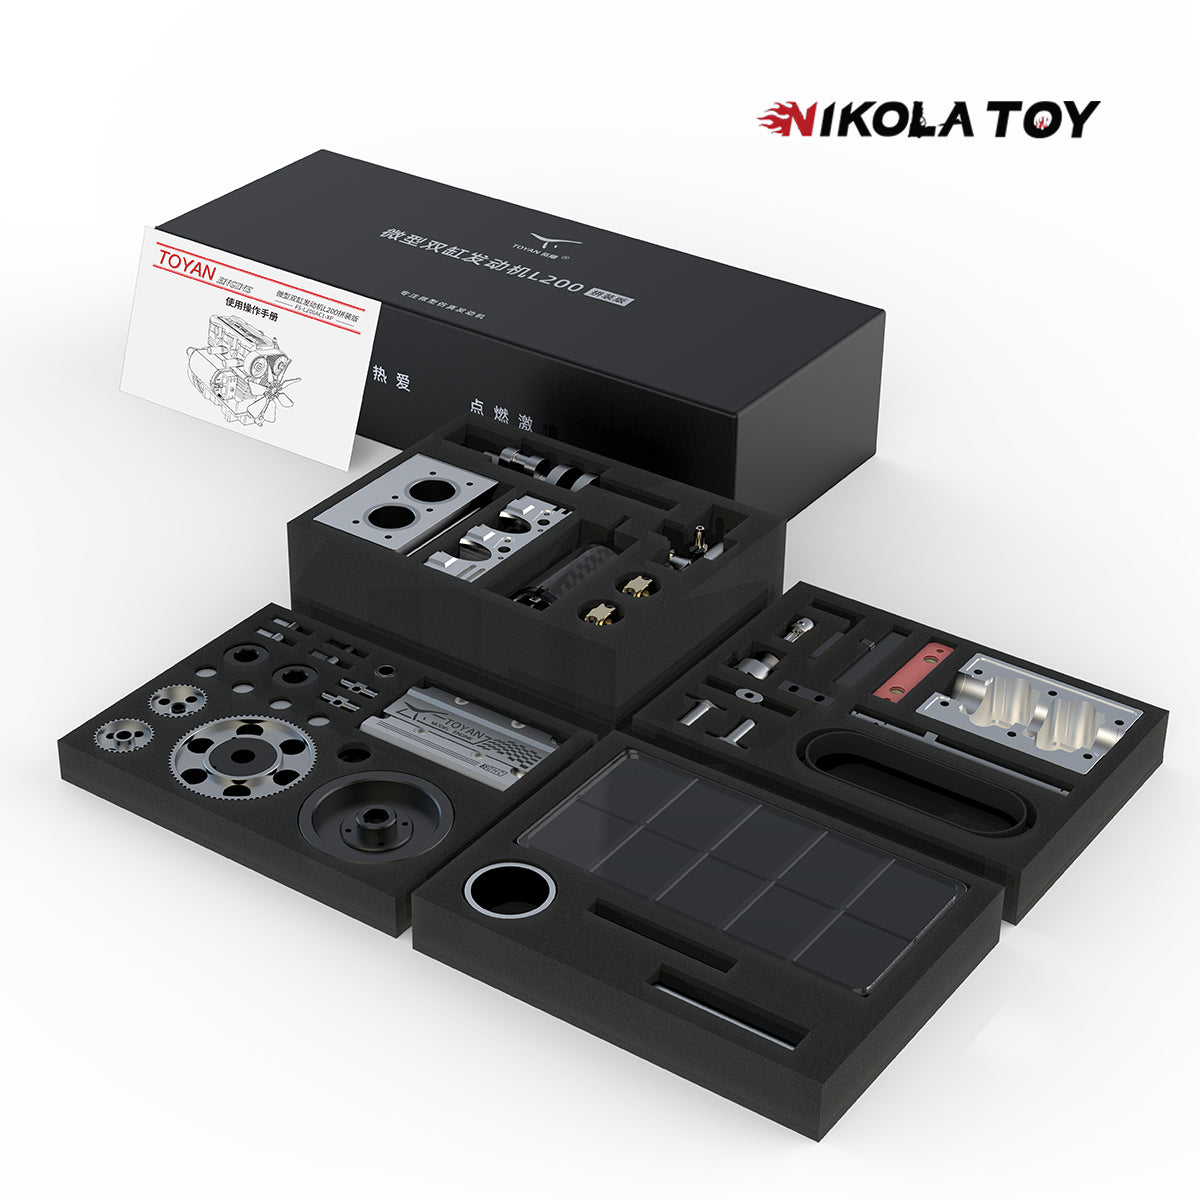 Toyan L200 Micro internal combustion engine - Gift set